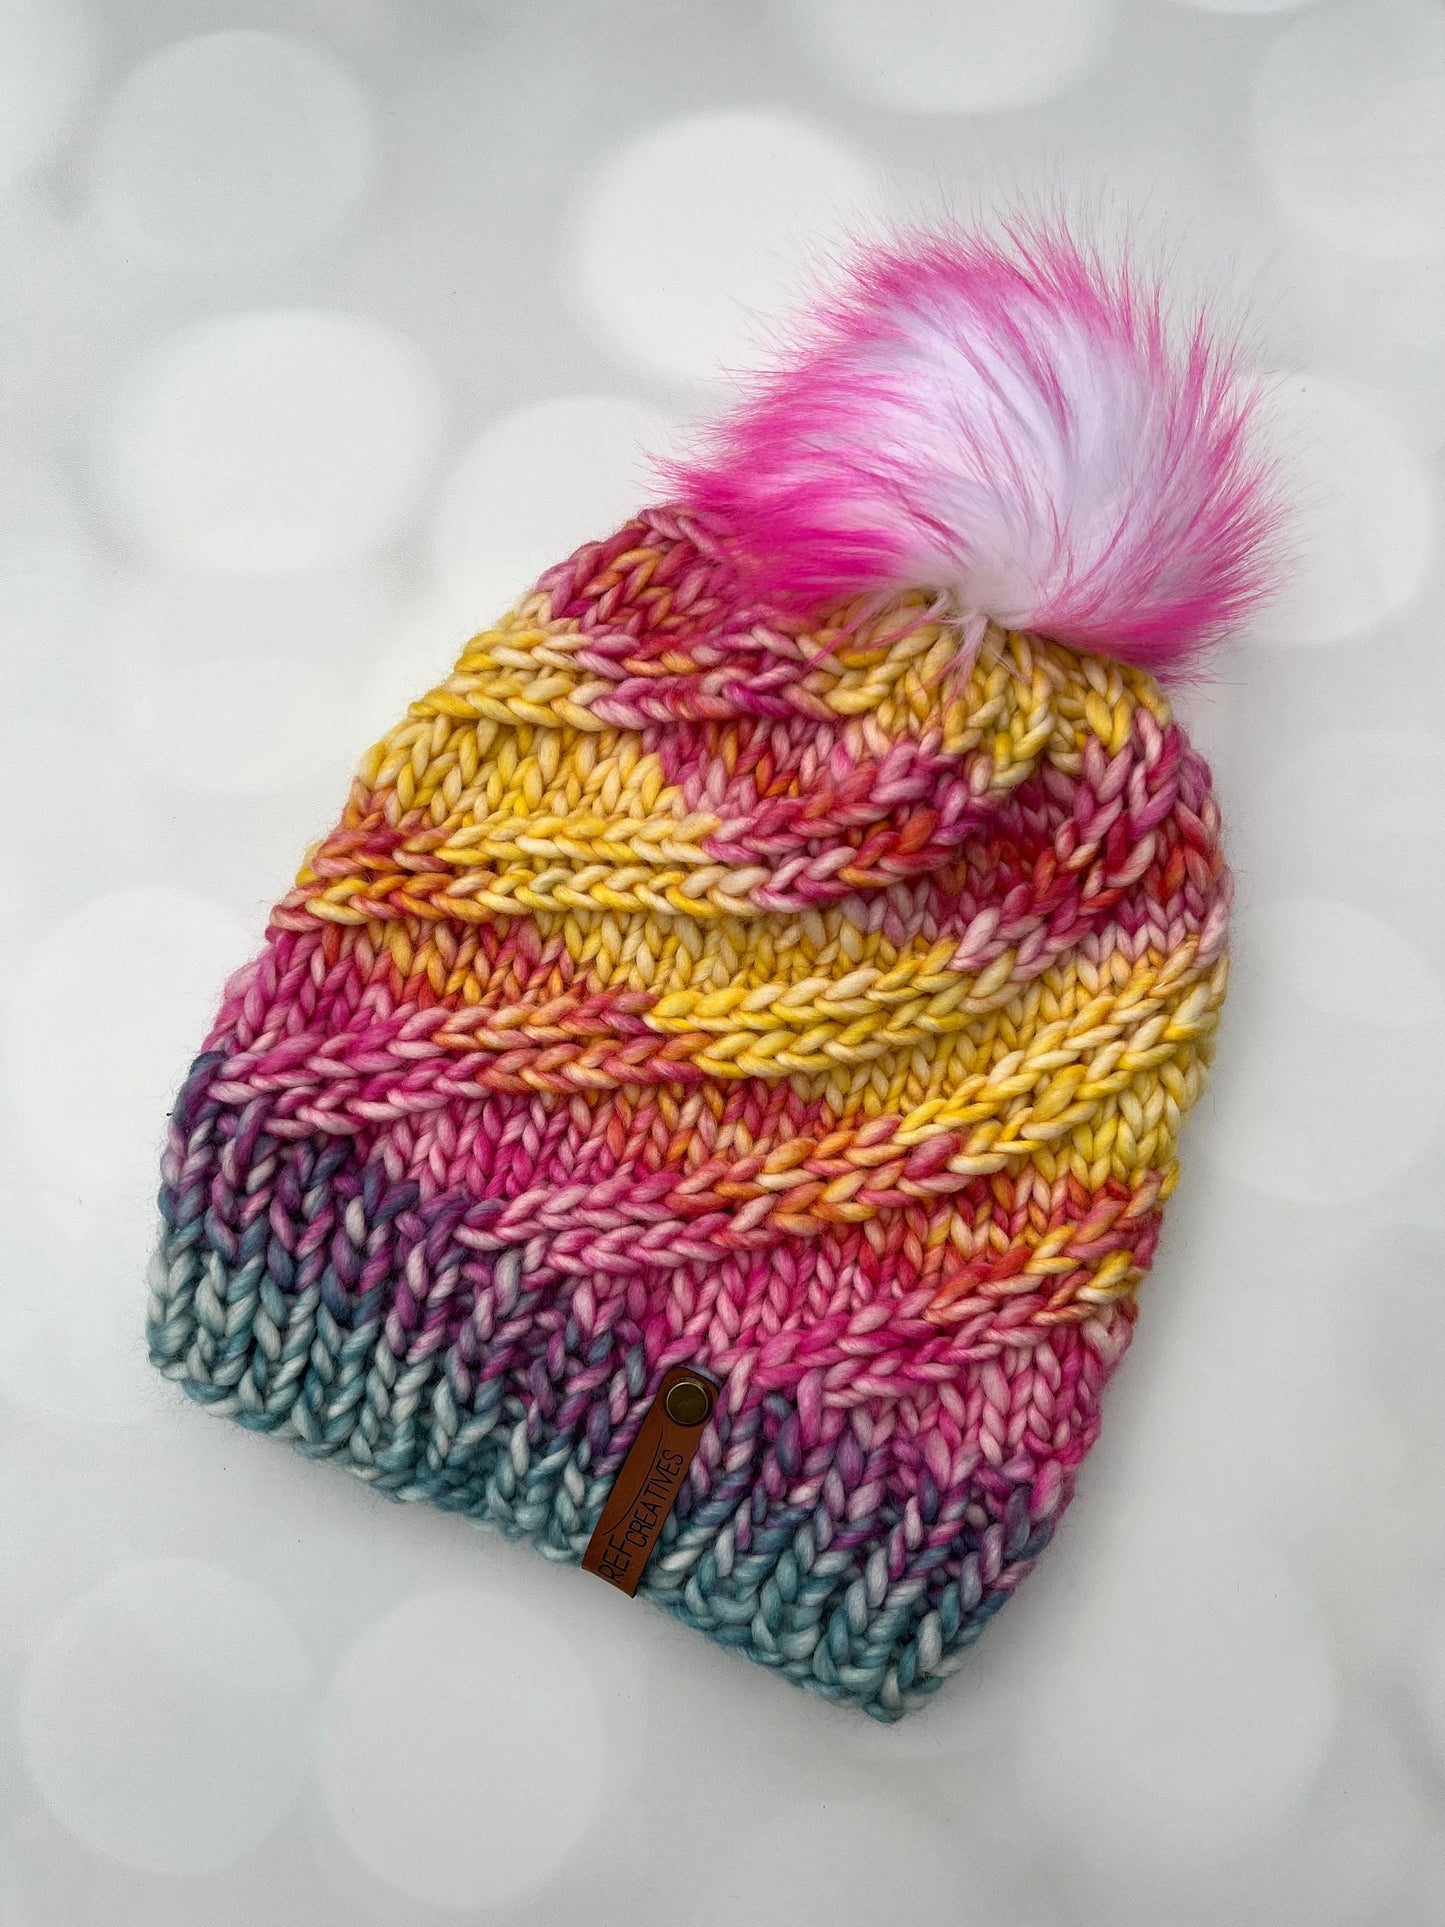 Luxury Rainbow Merino Wool Knit Hat - Teal, Pink, Purple, Yellow, and Orange Striped Swirls Hand Knit Hat with Hand Dyed Yarn